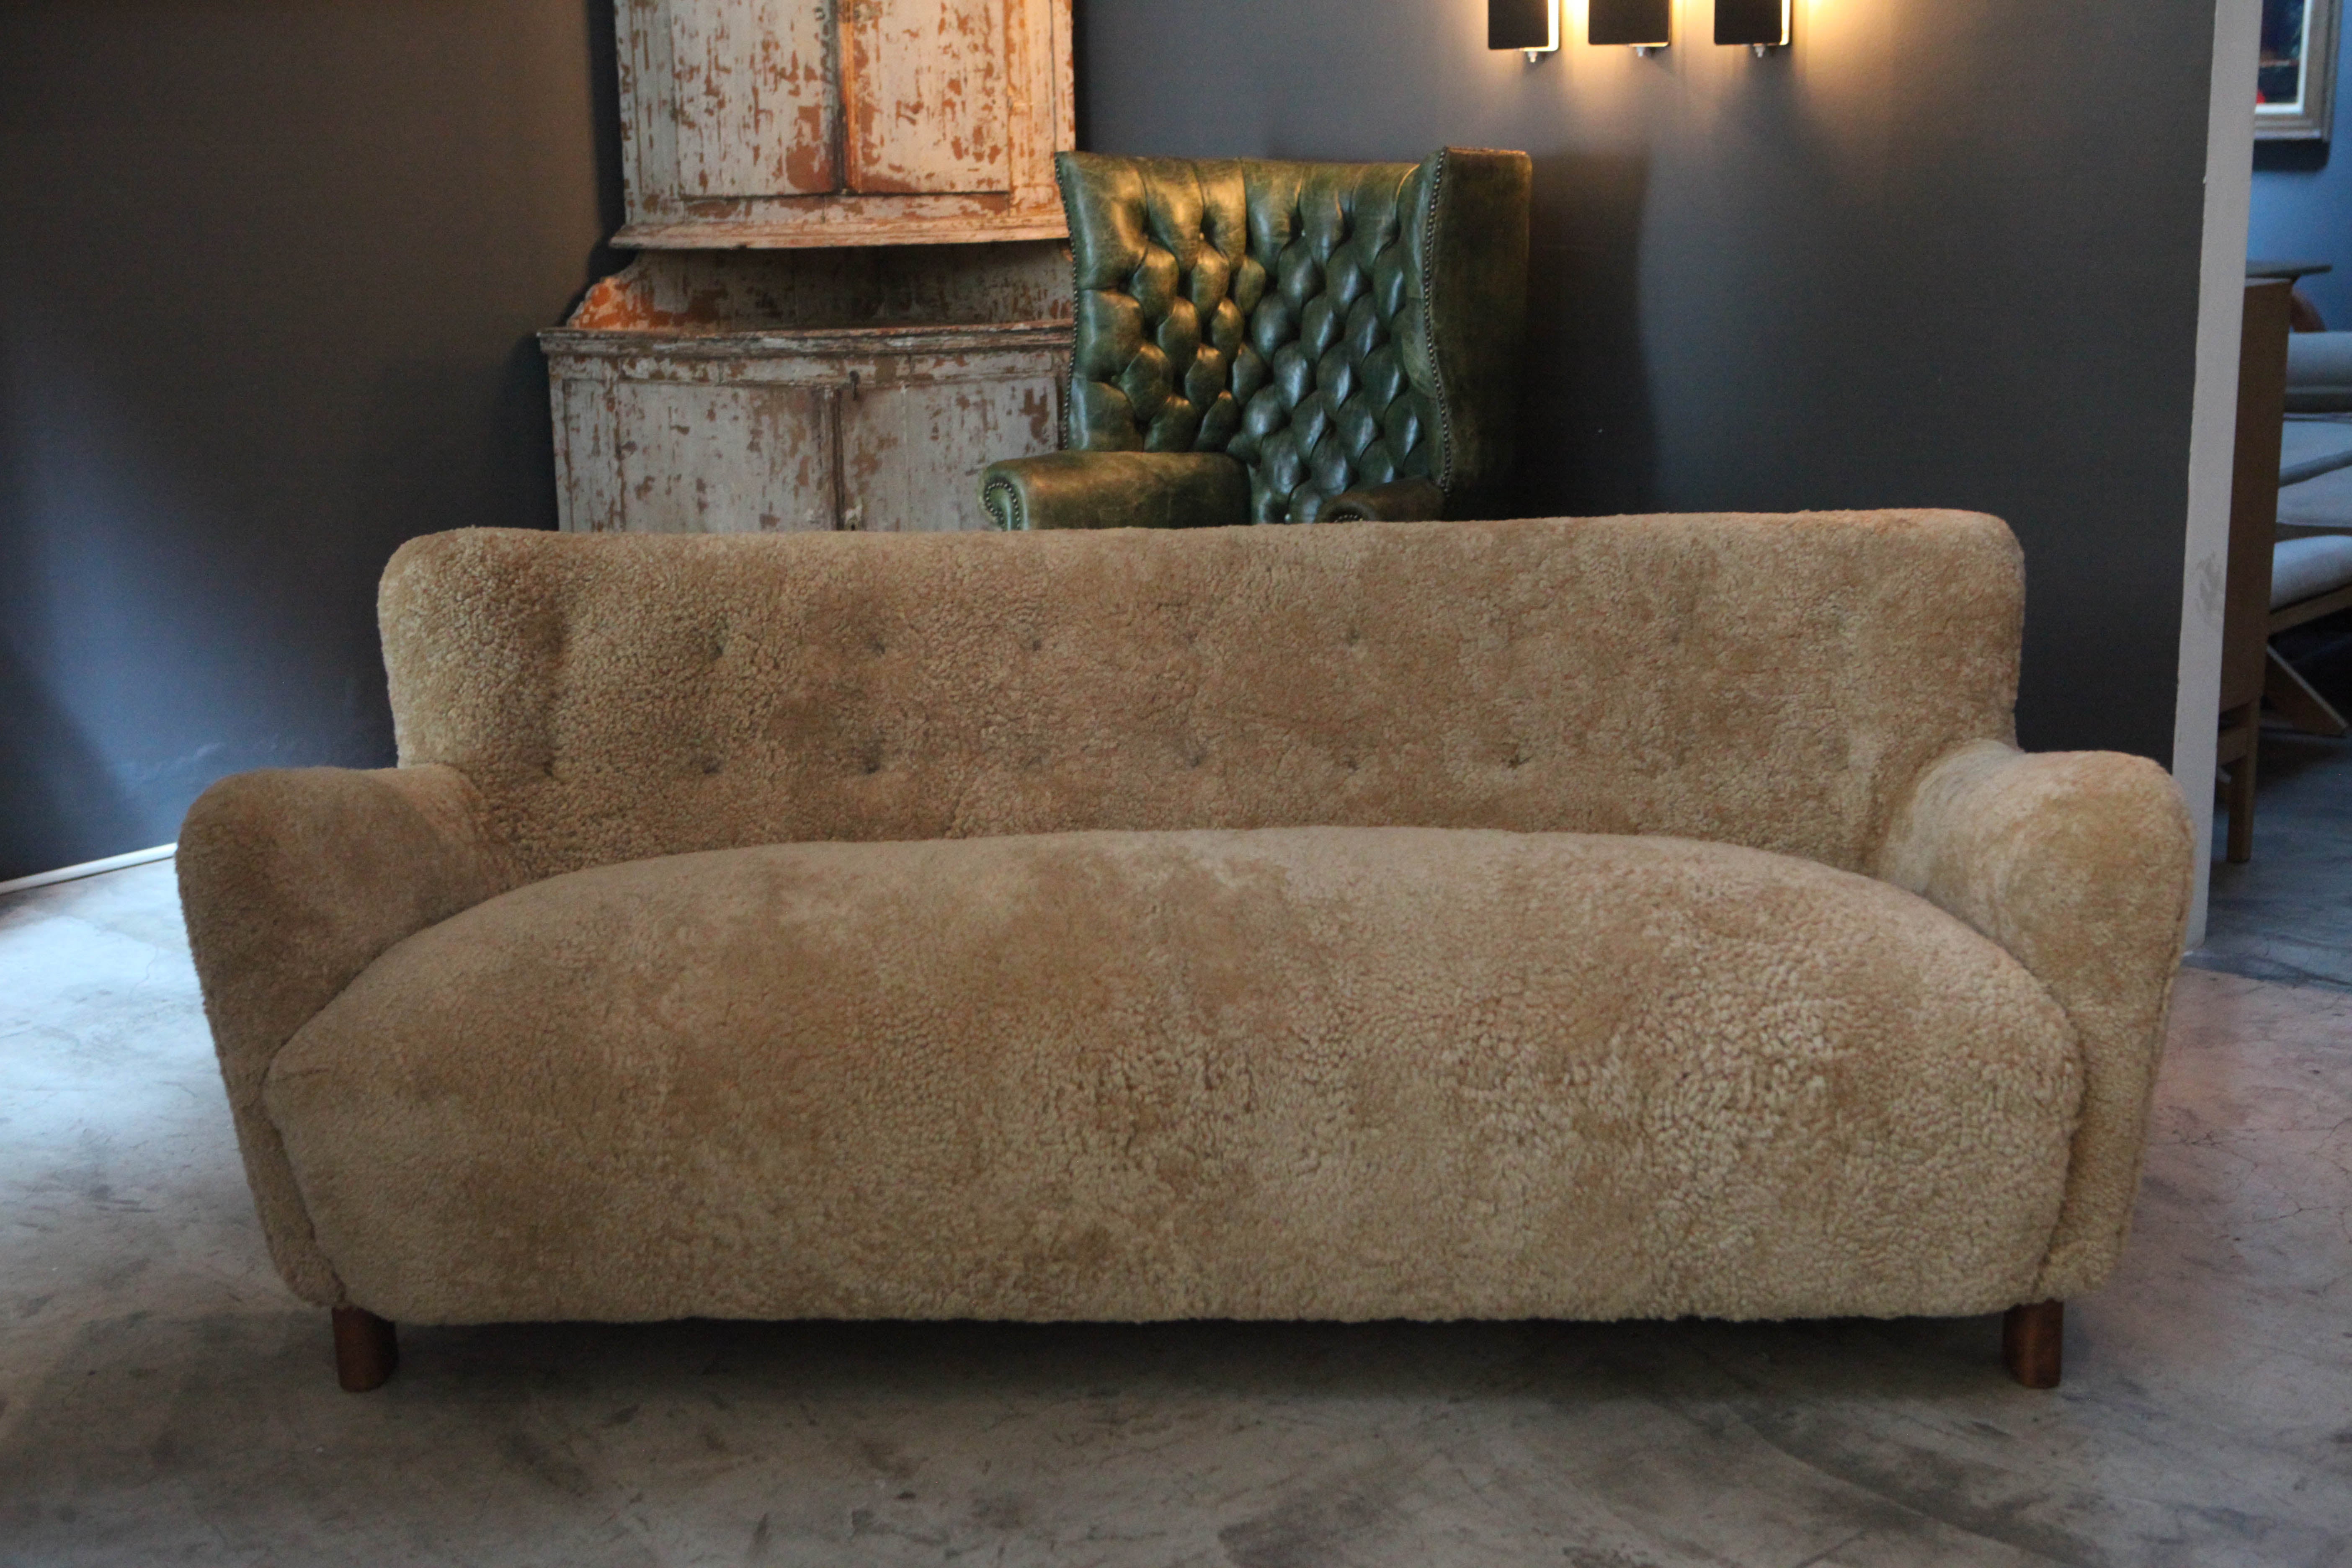 Hansen's Classic sofa in a perfect neutral sheepskin.

   